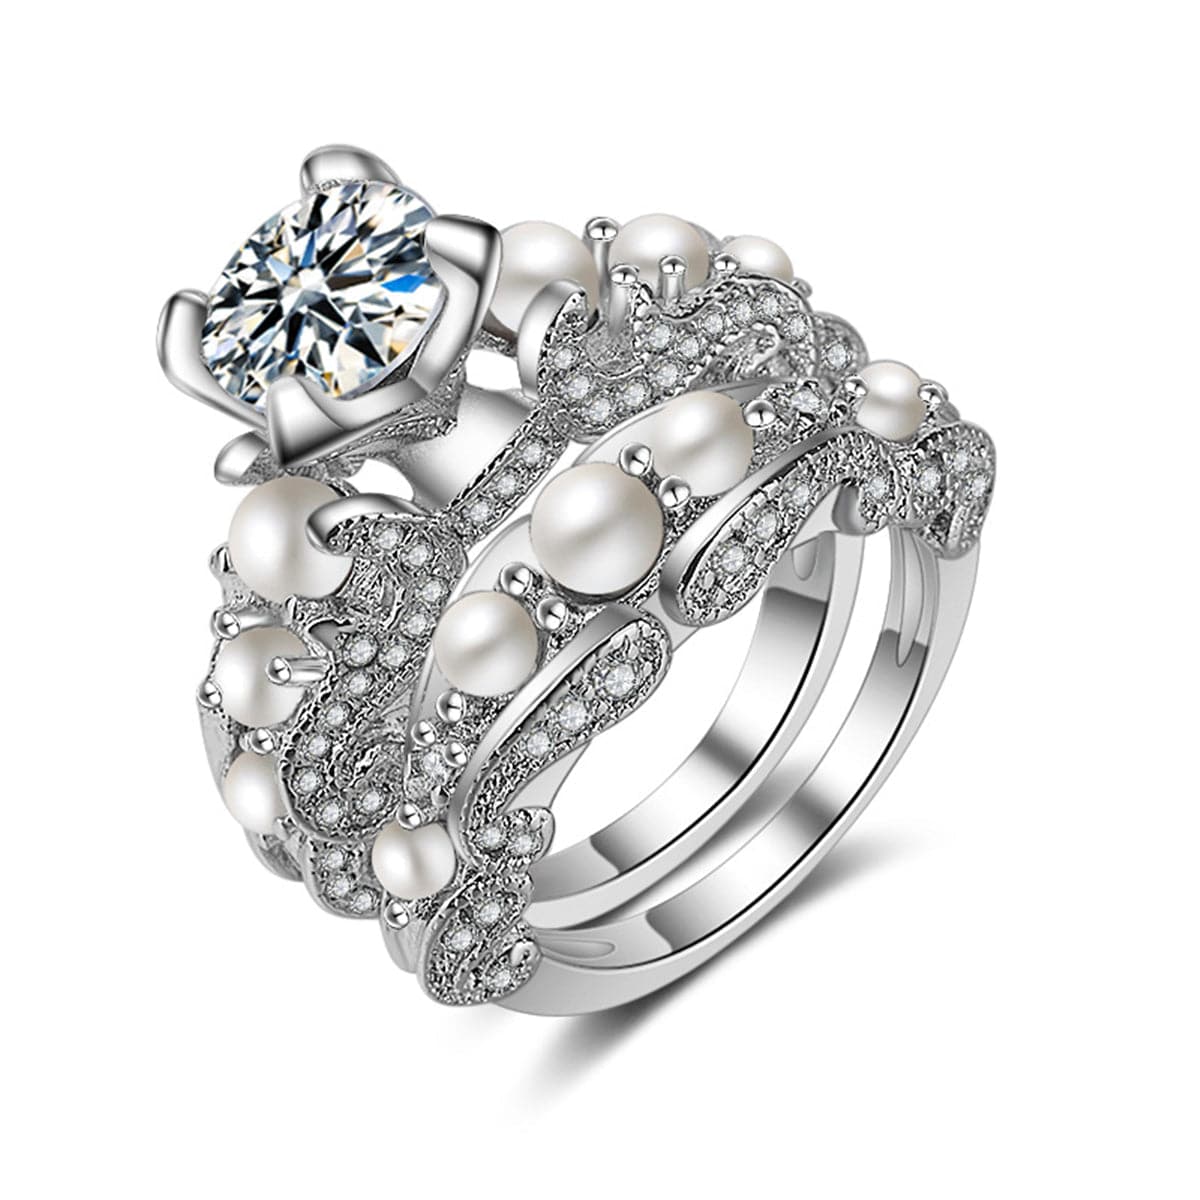 Crystal & Pearl Silver-Plated Botany Ring Set